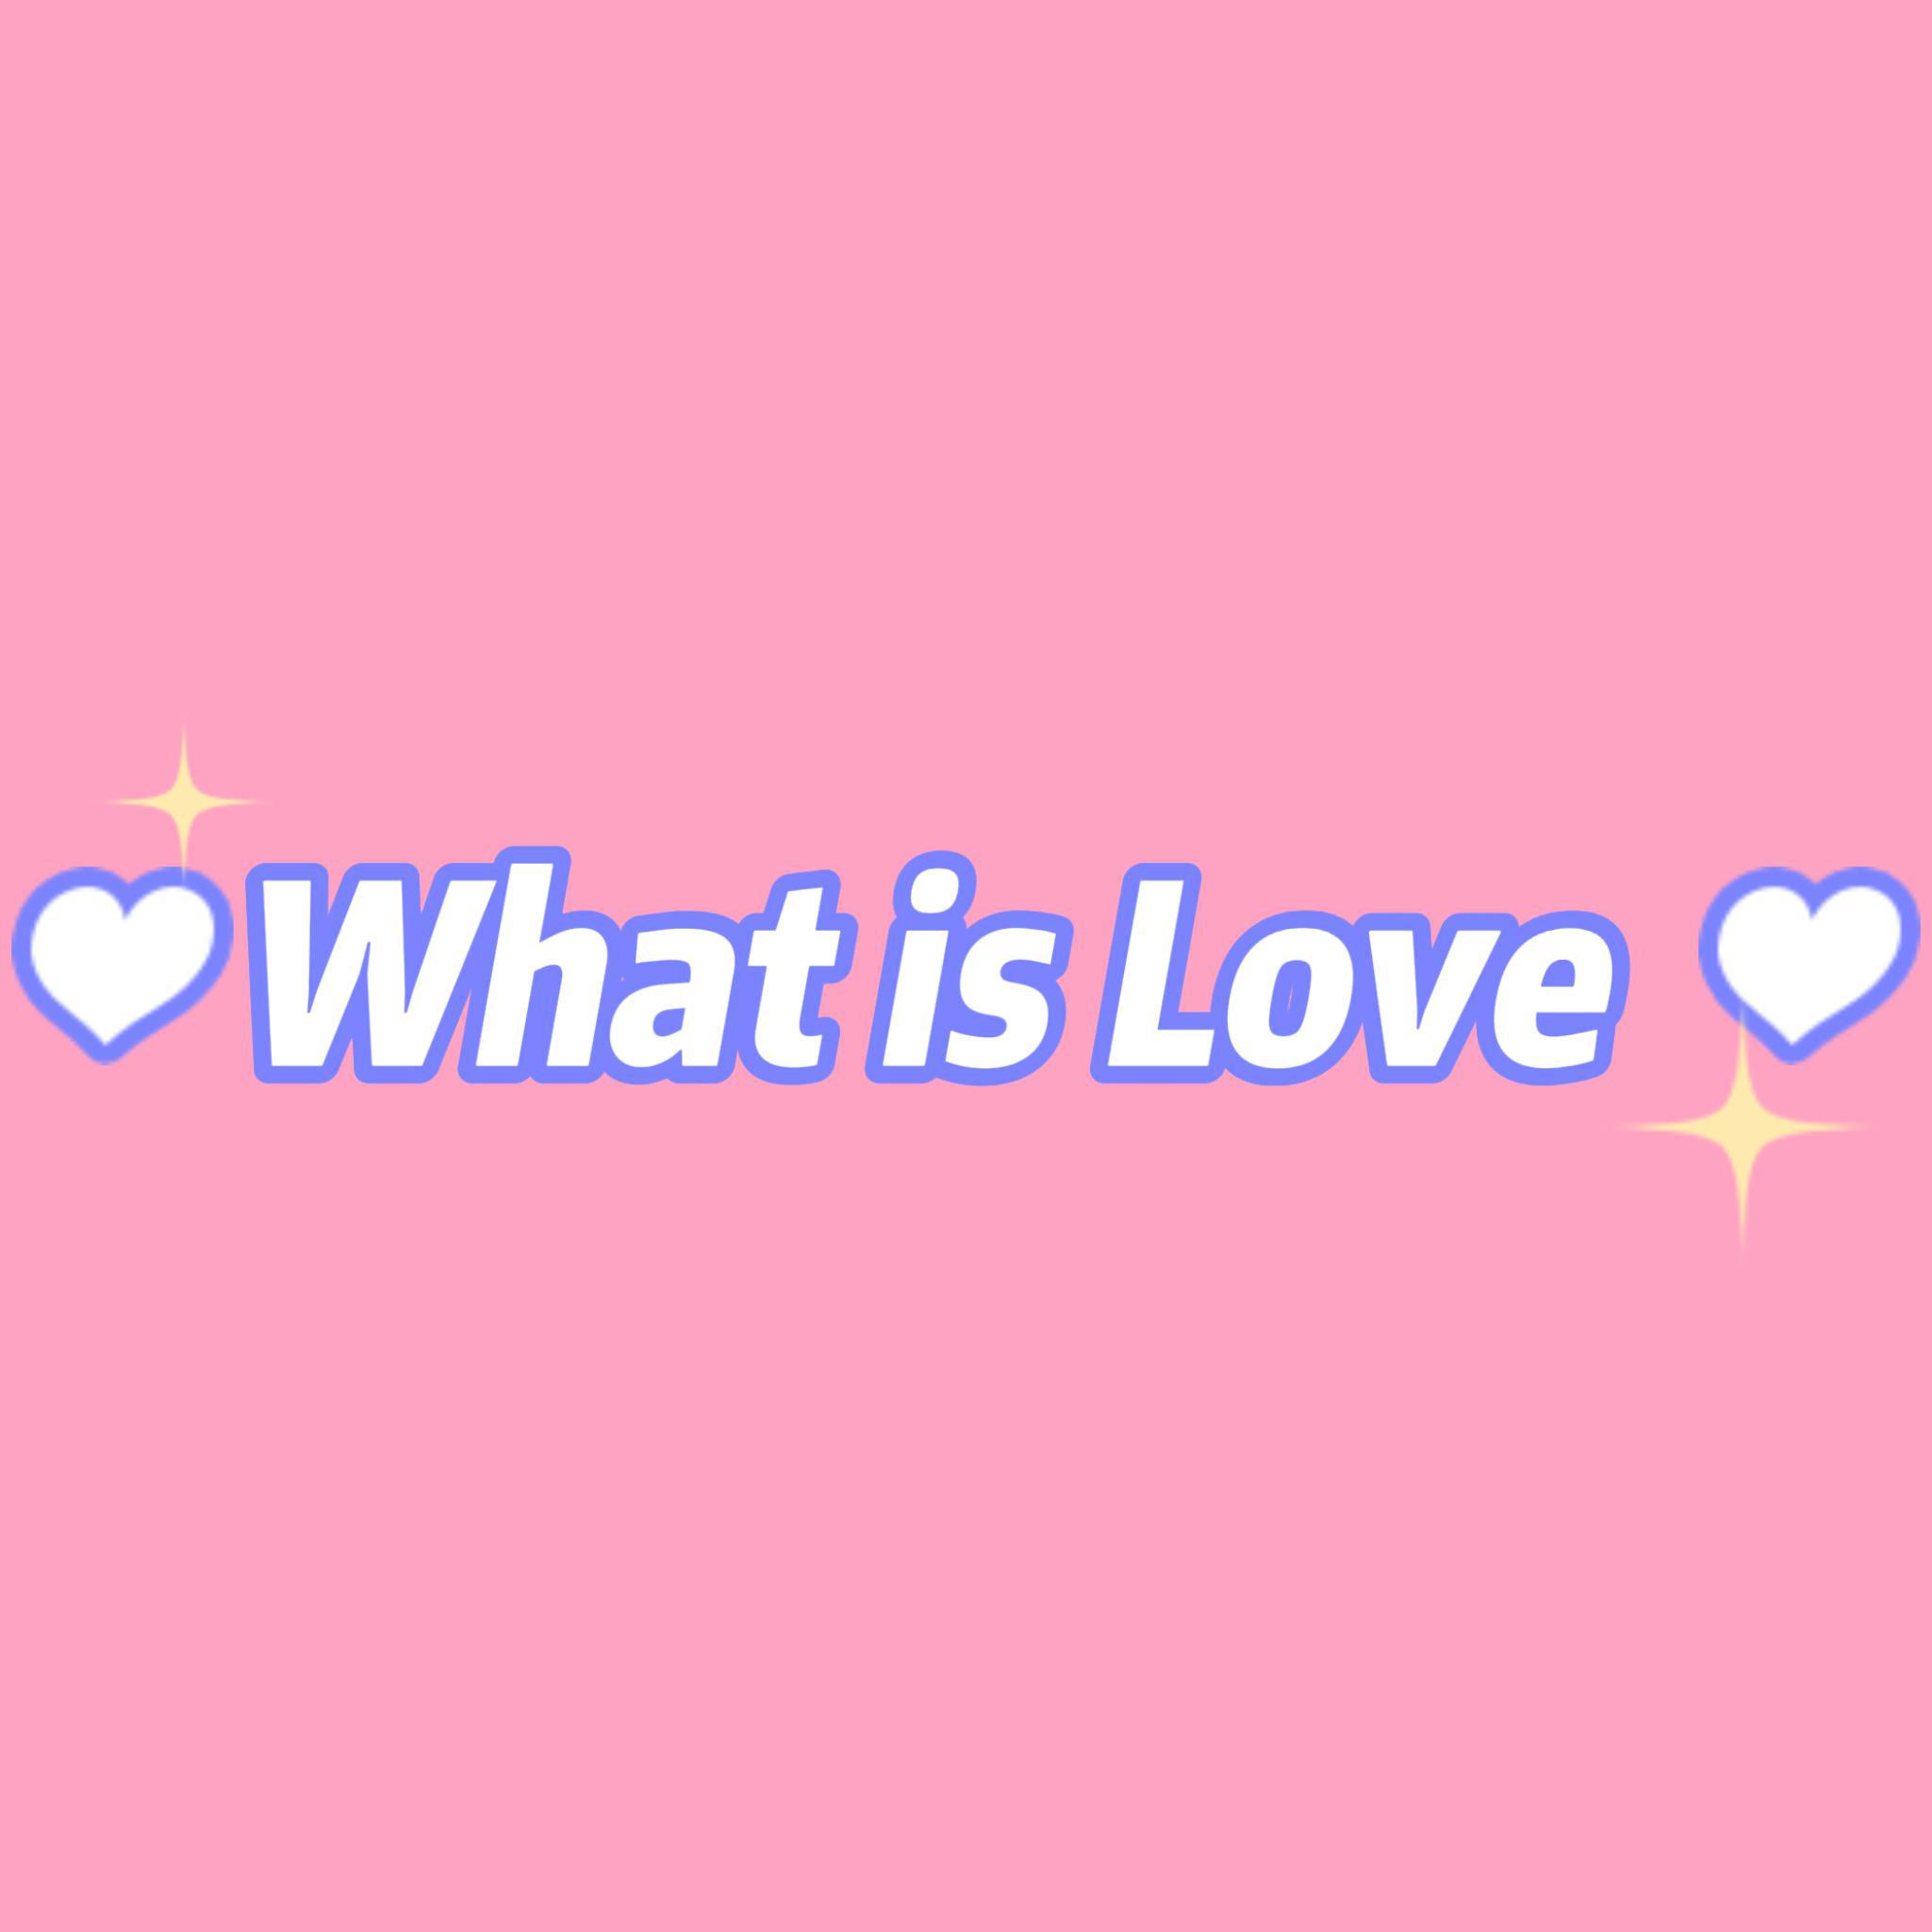 是容花不是容fa - What Is Love?